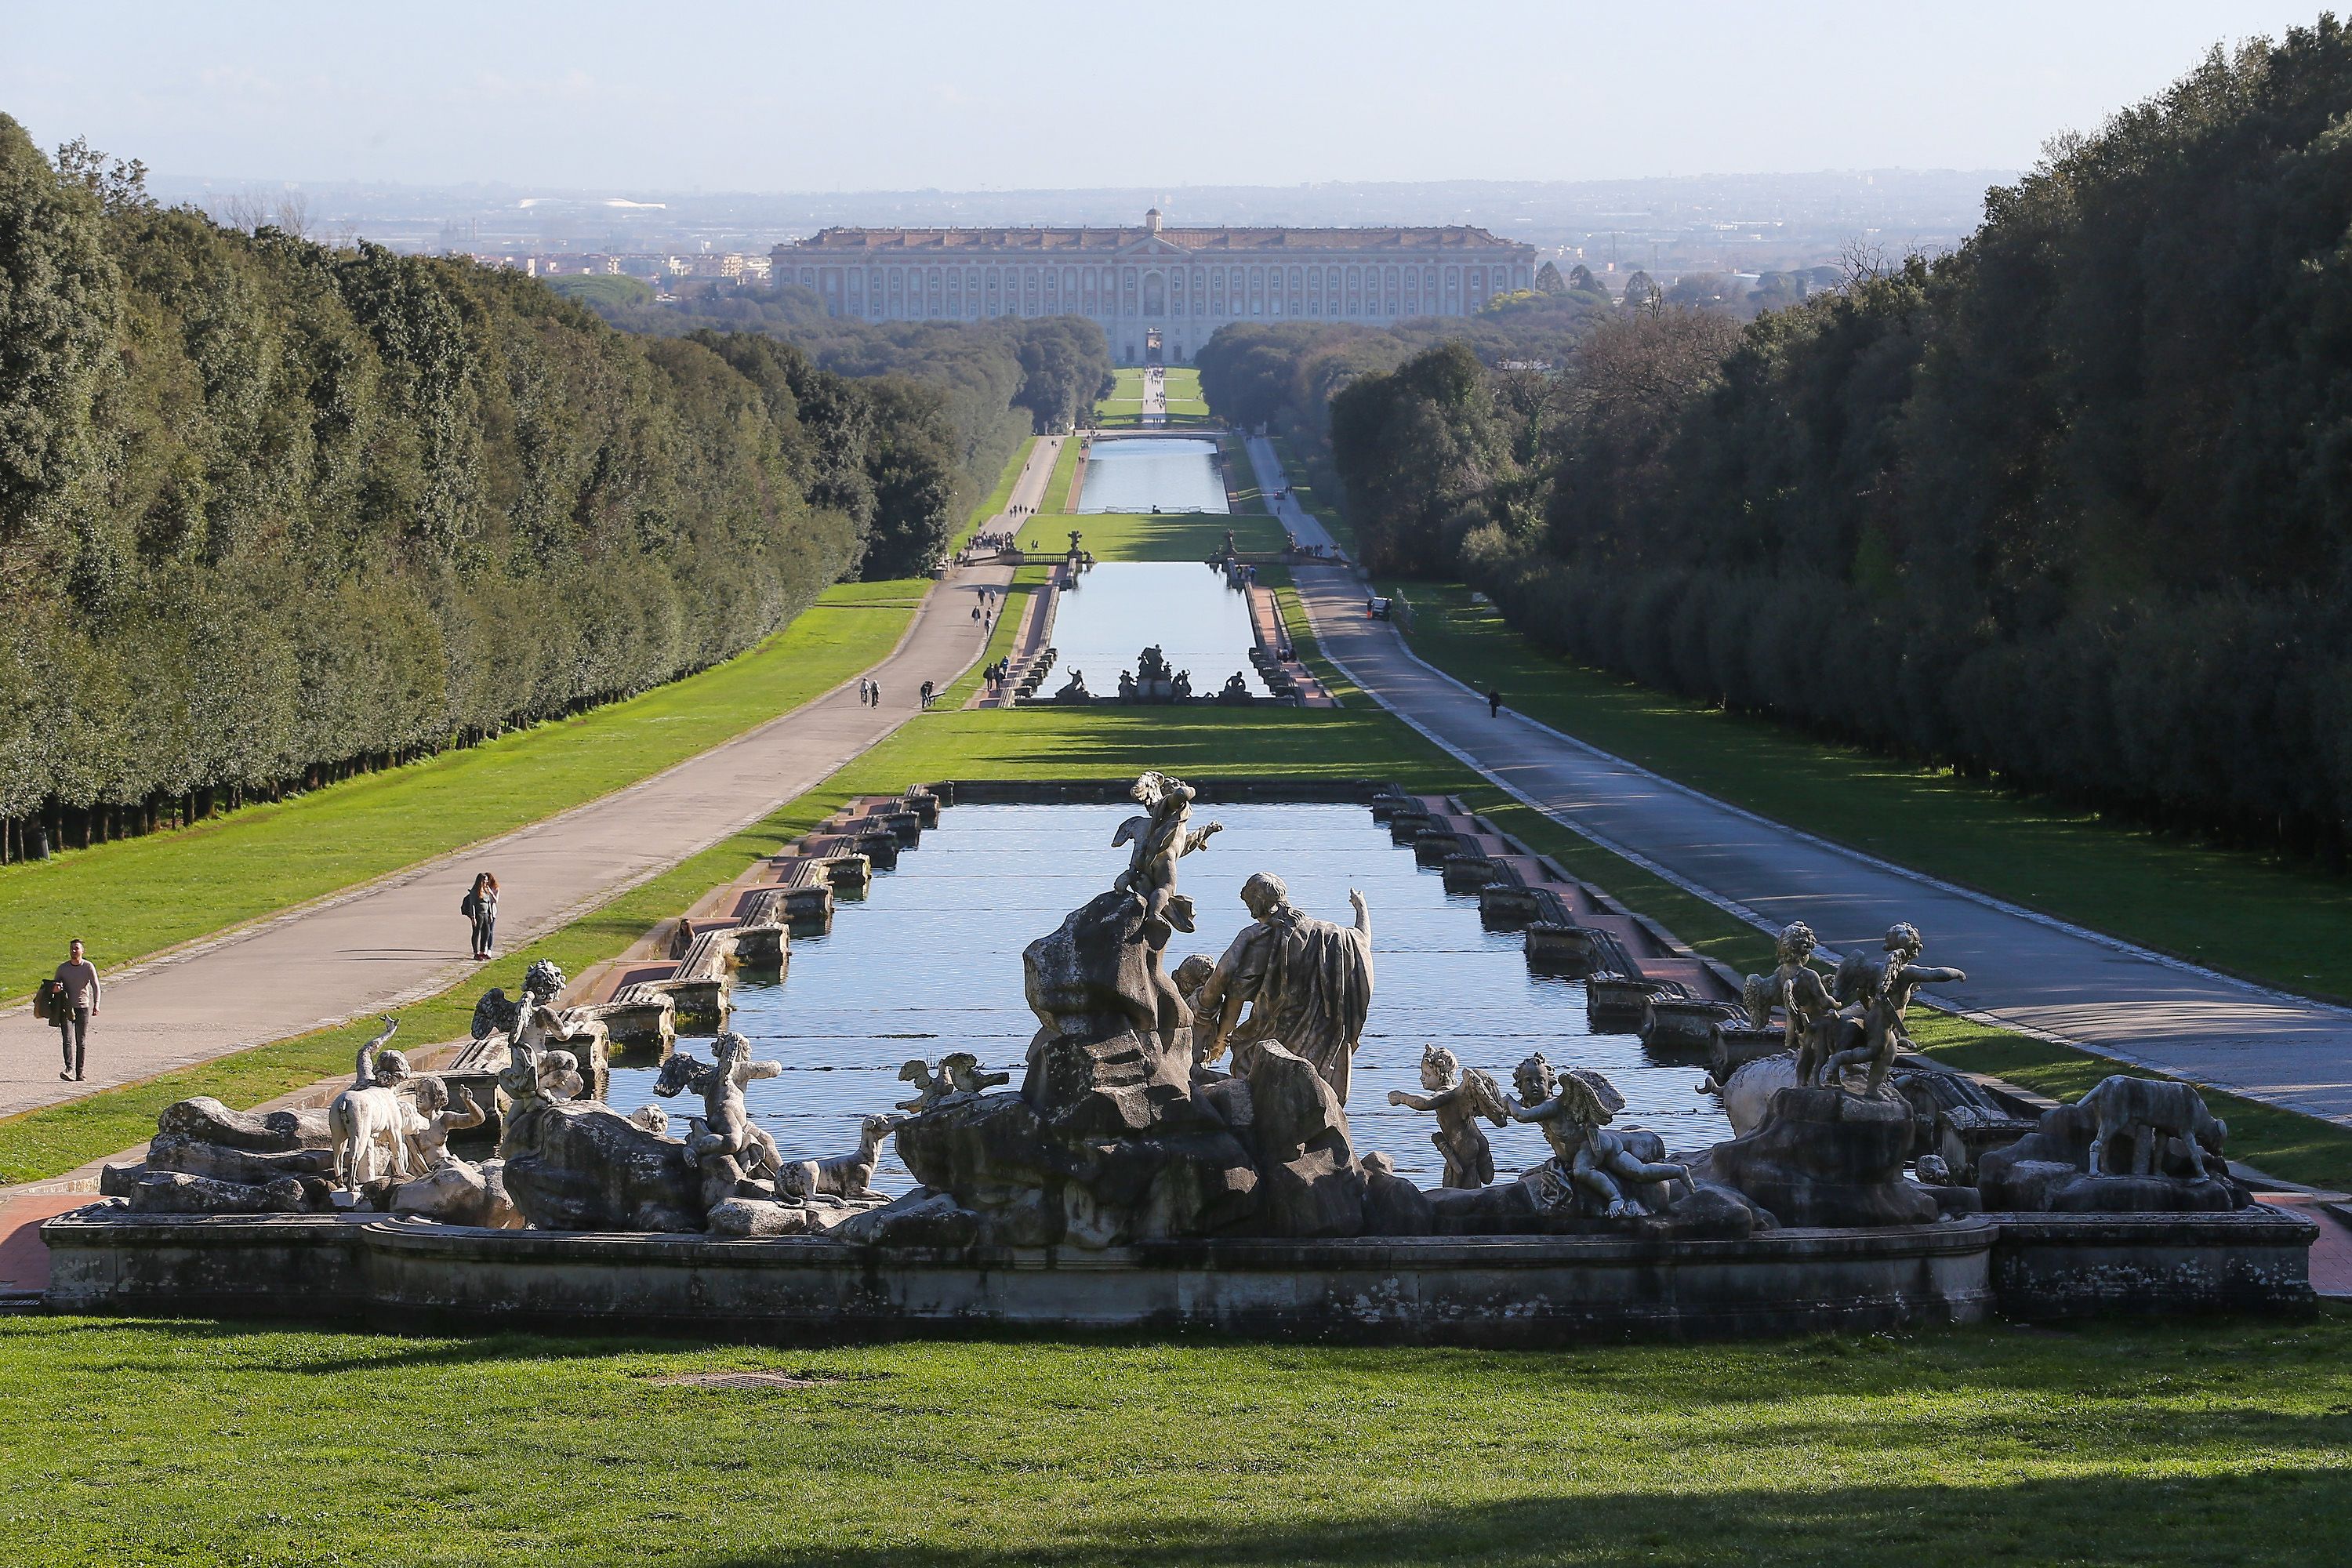 10 Spectacular Royal Gardens - Royal Gardens to Visit